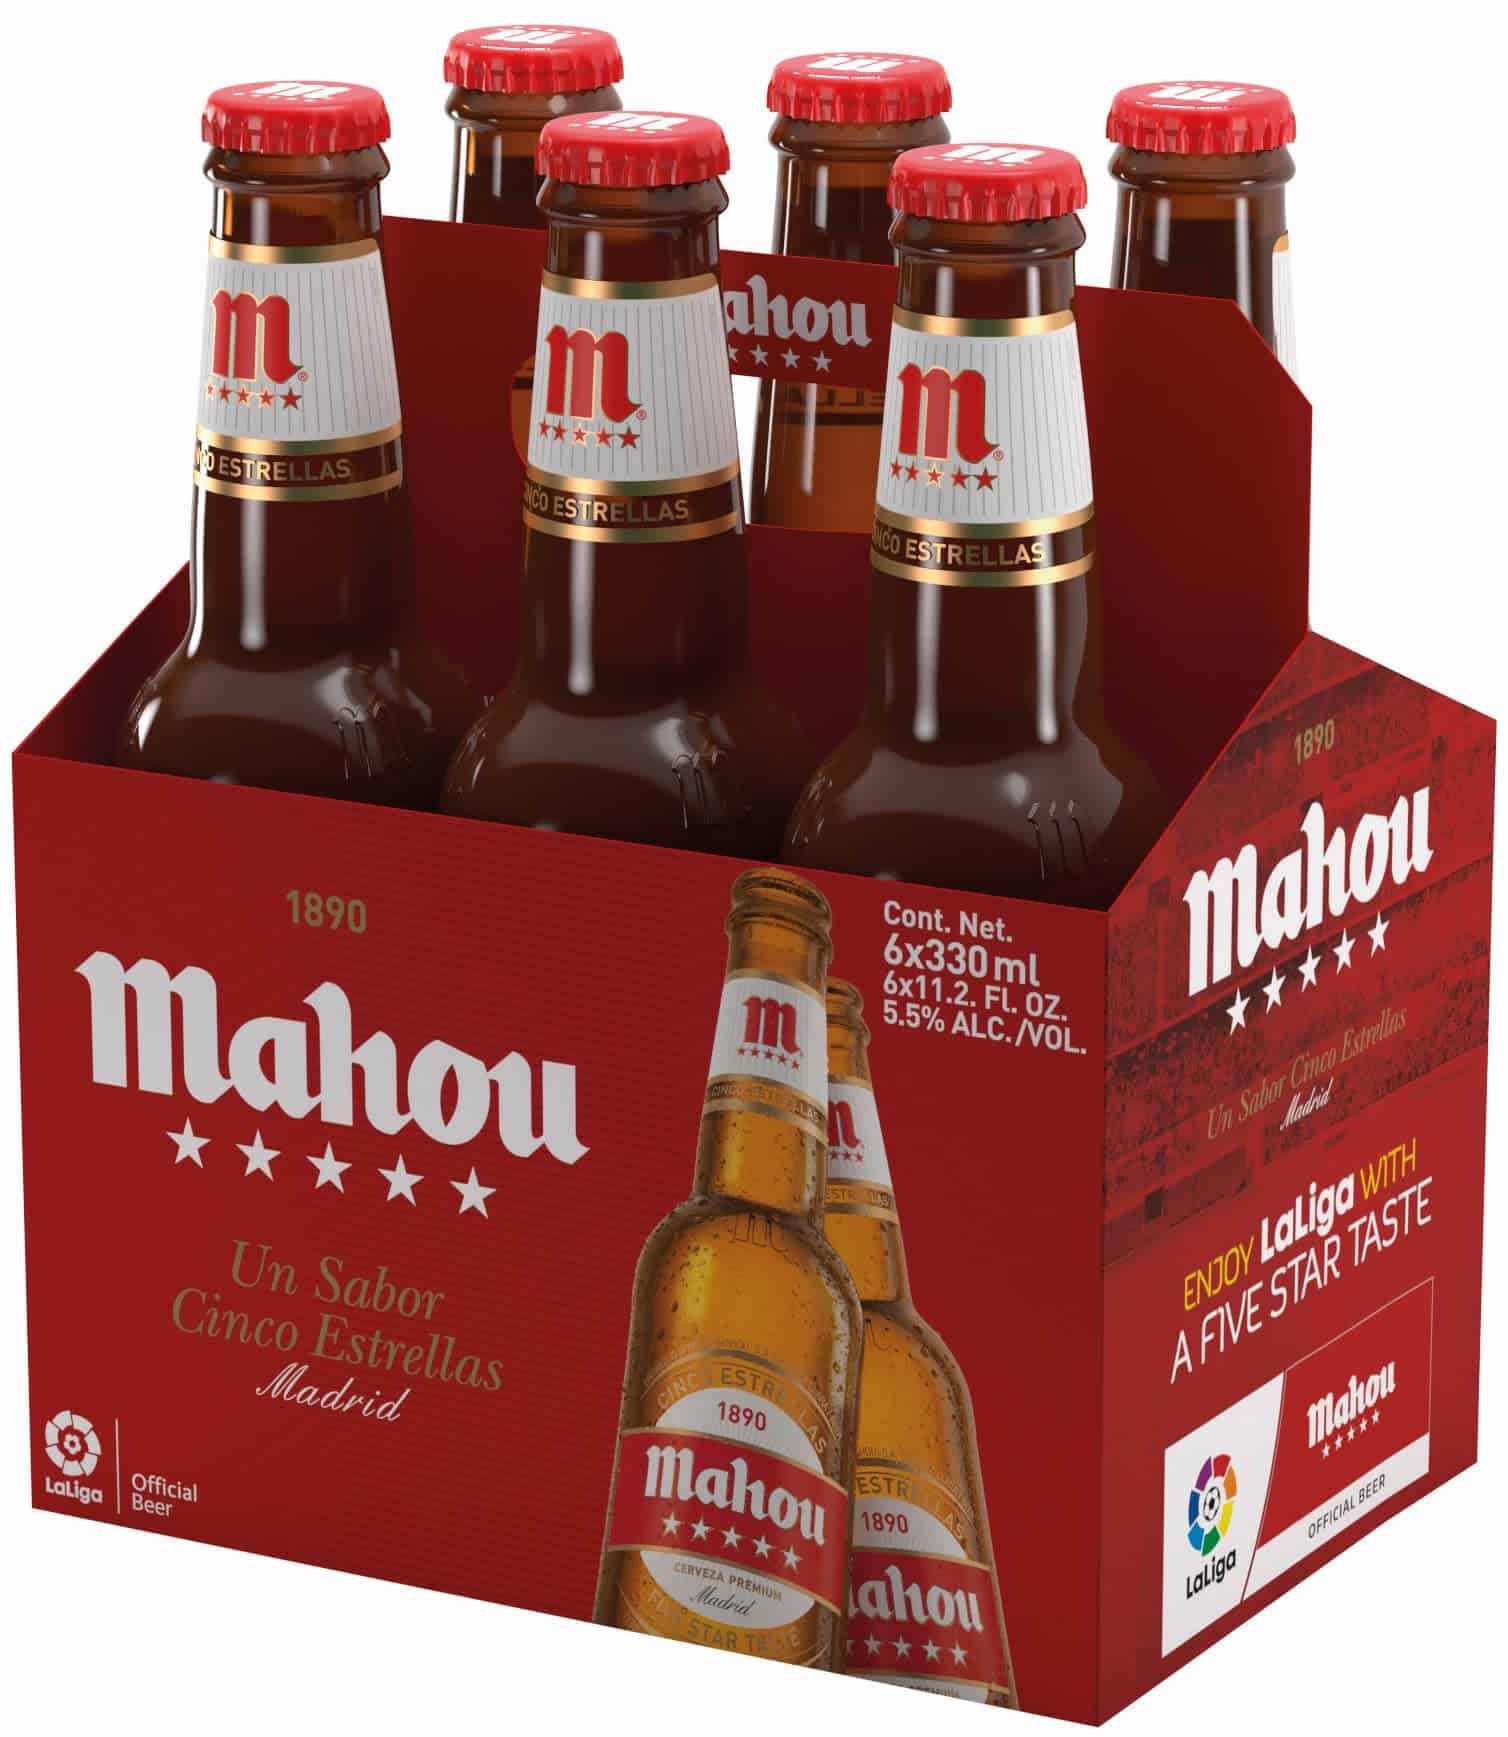 Mahou bottle 6-pack